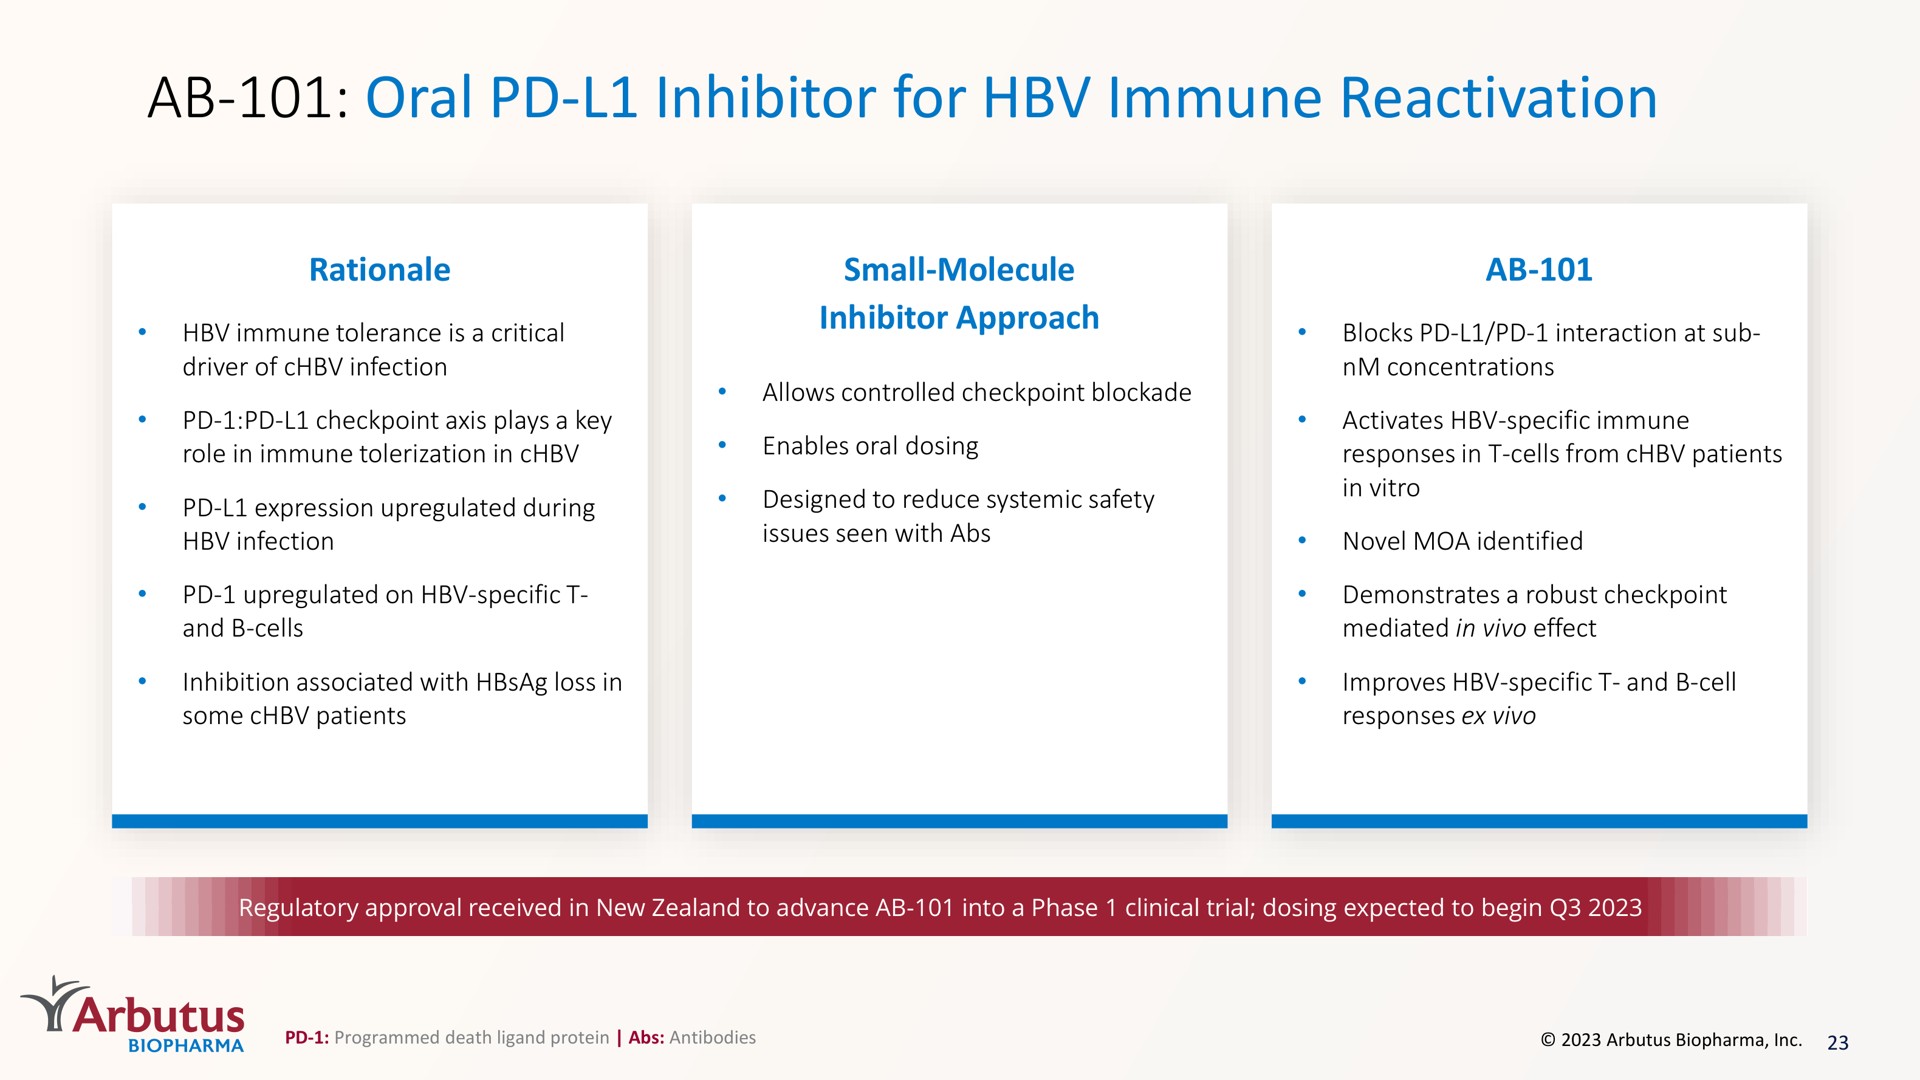 oral inhibitor for immune reactivation | Arbutus Biopharma